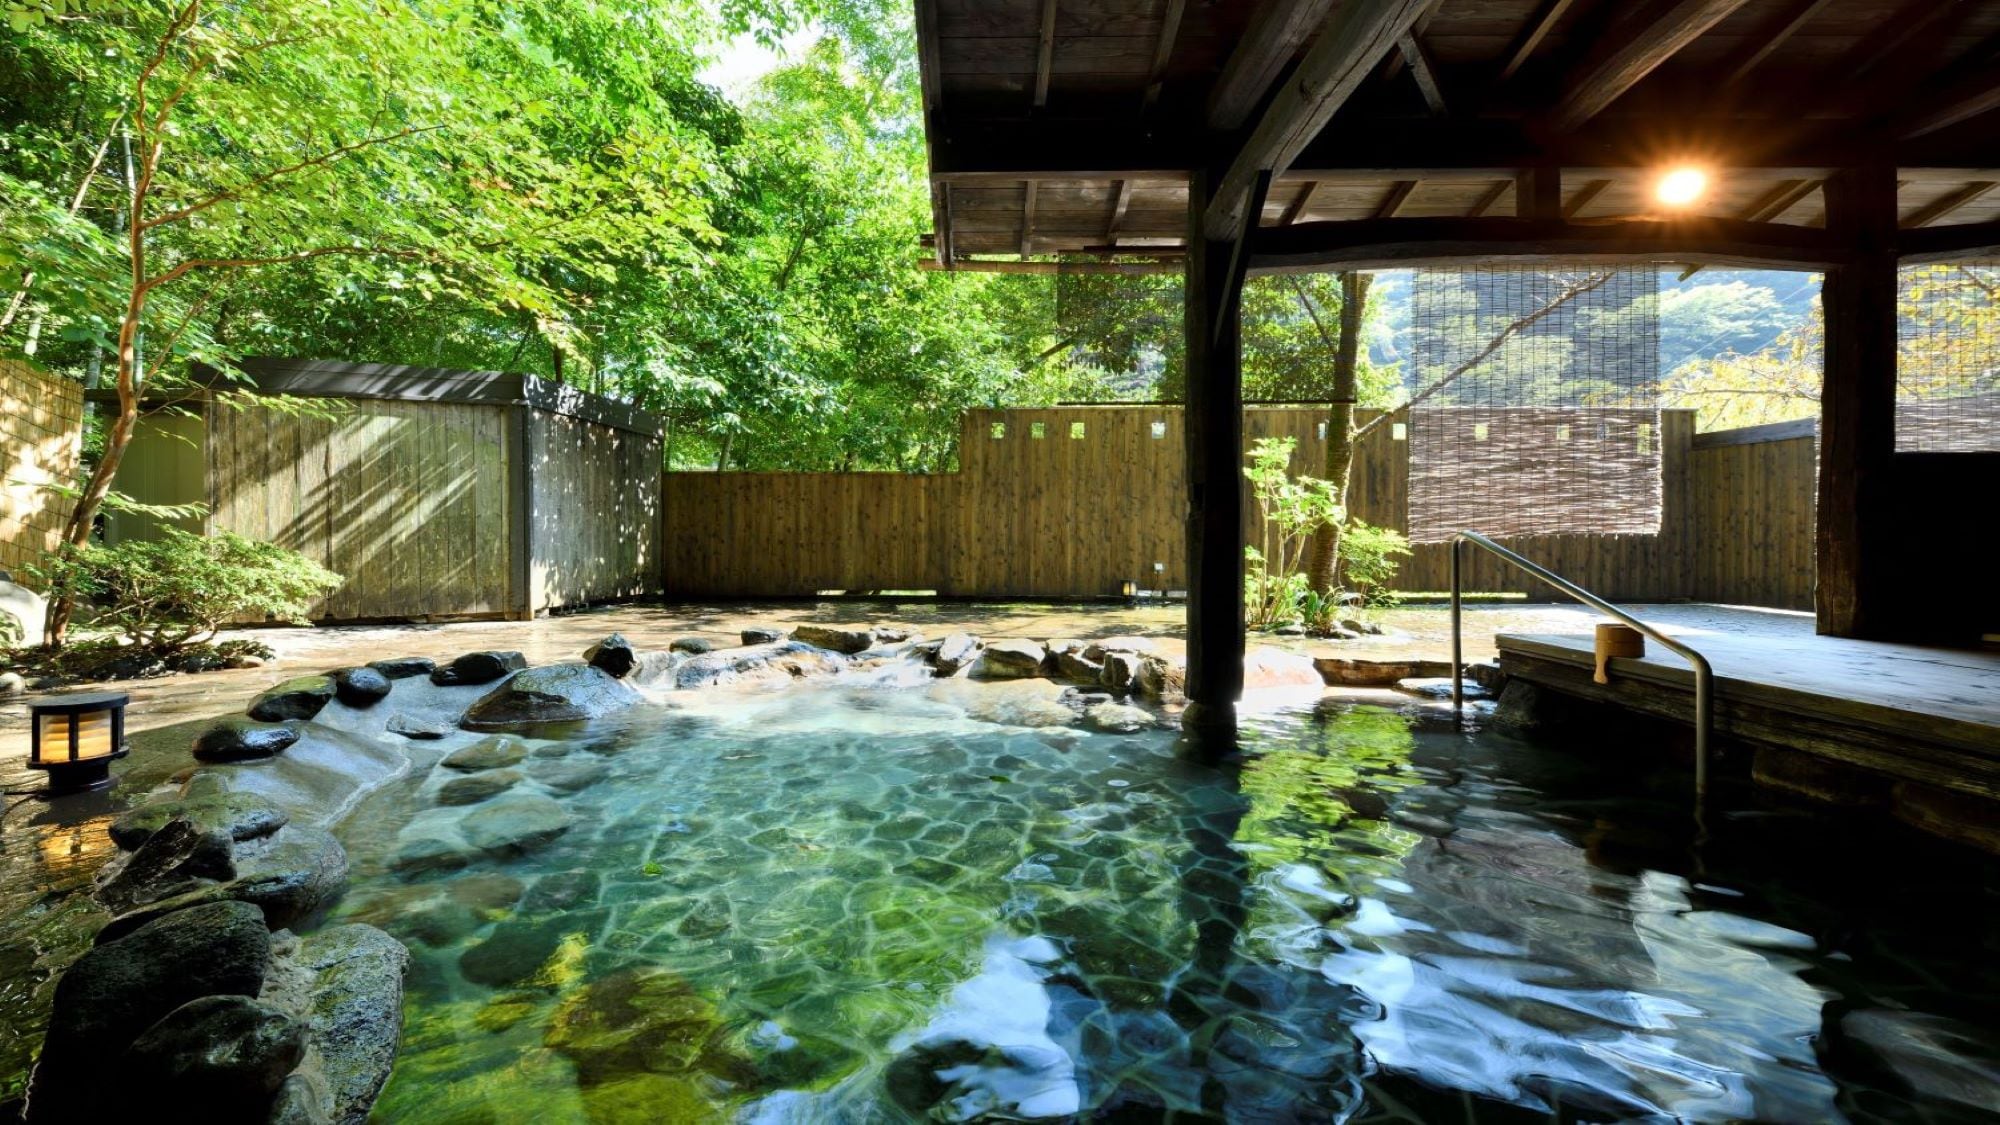 Private open-air bath "Kanyama no Yu" 1 set 50 minutes 3000 yen